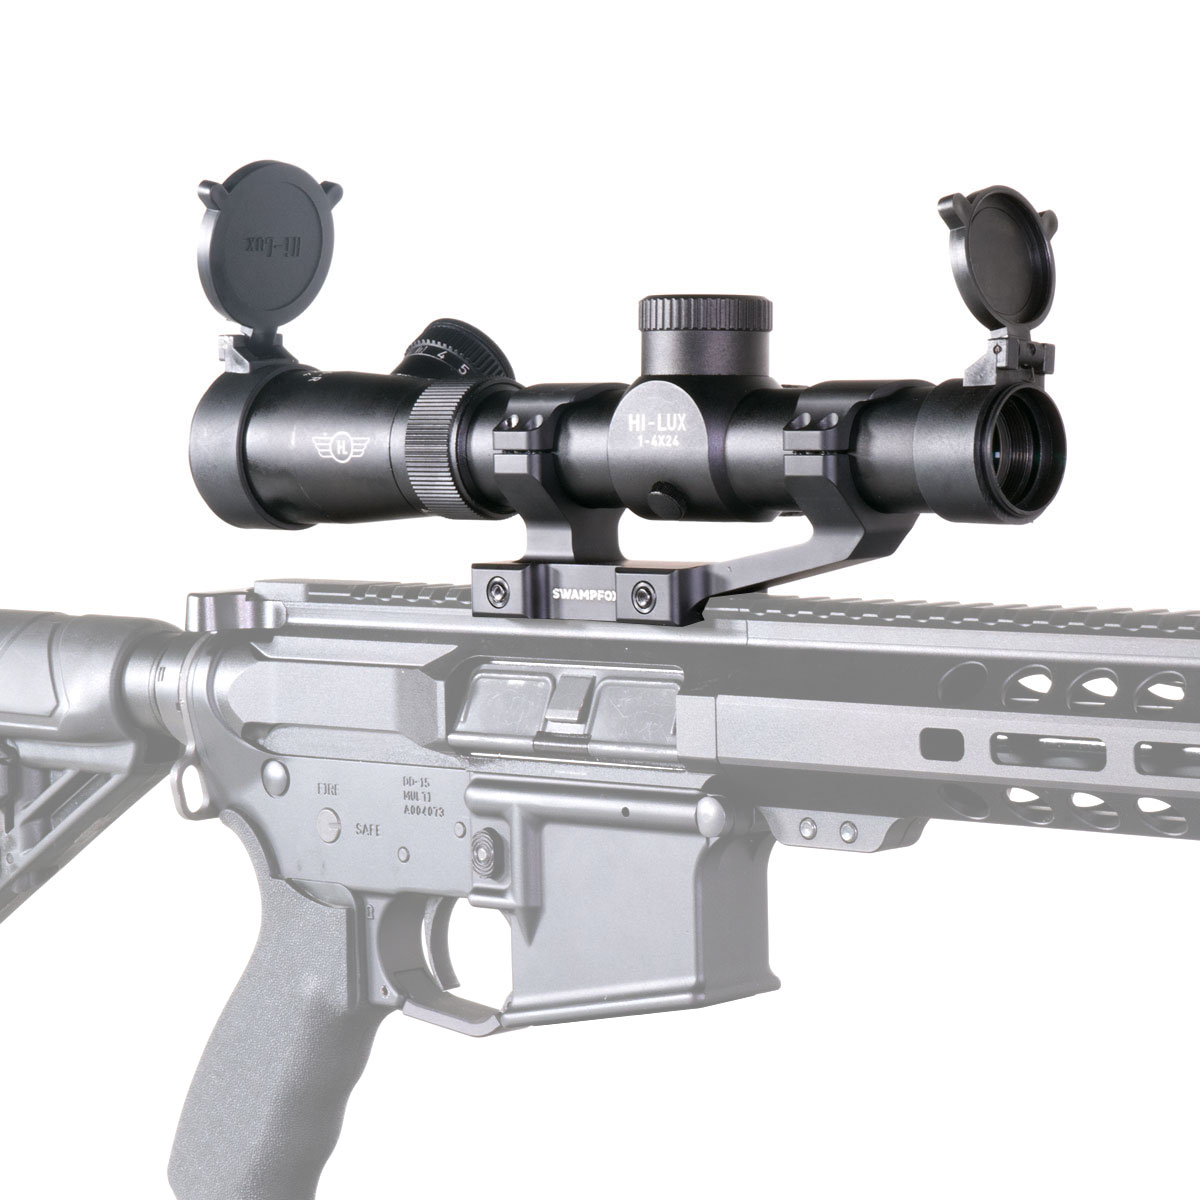 Range Loadout: CMR4 1-4X24 LPVO Rifle Scope + Swampfox Optics Independence Mount 30mm